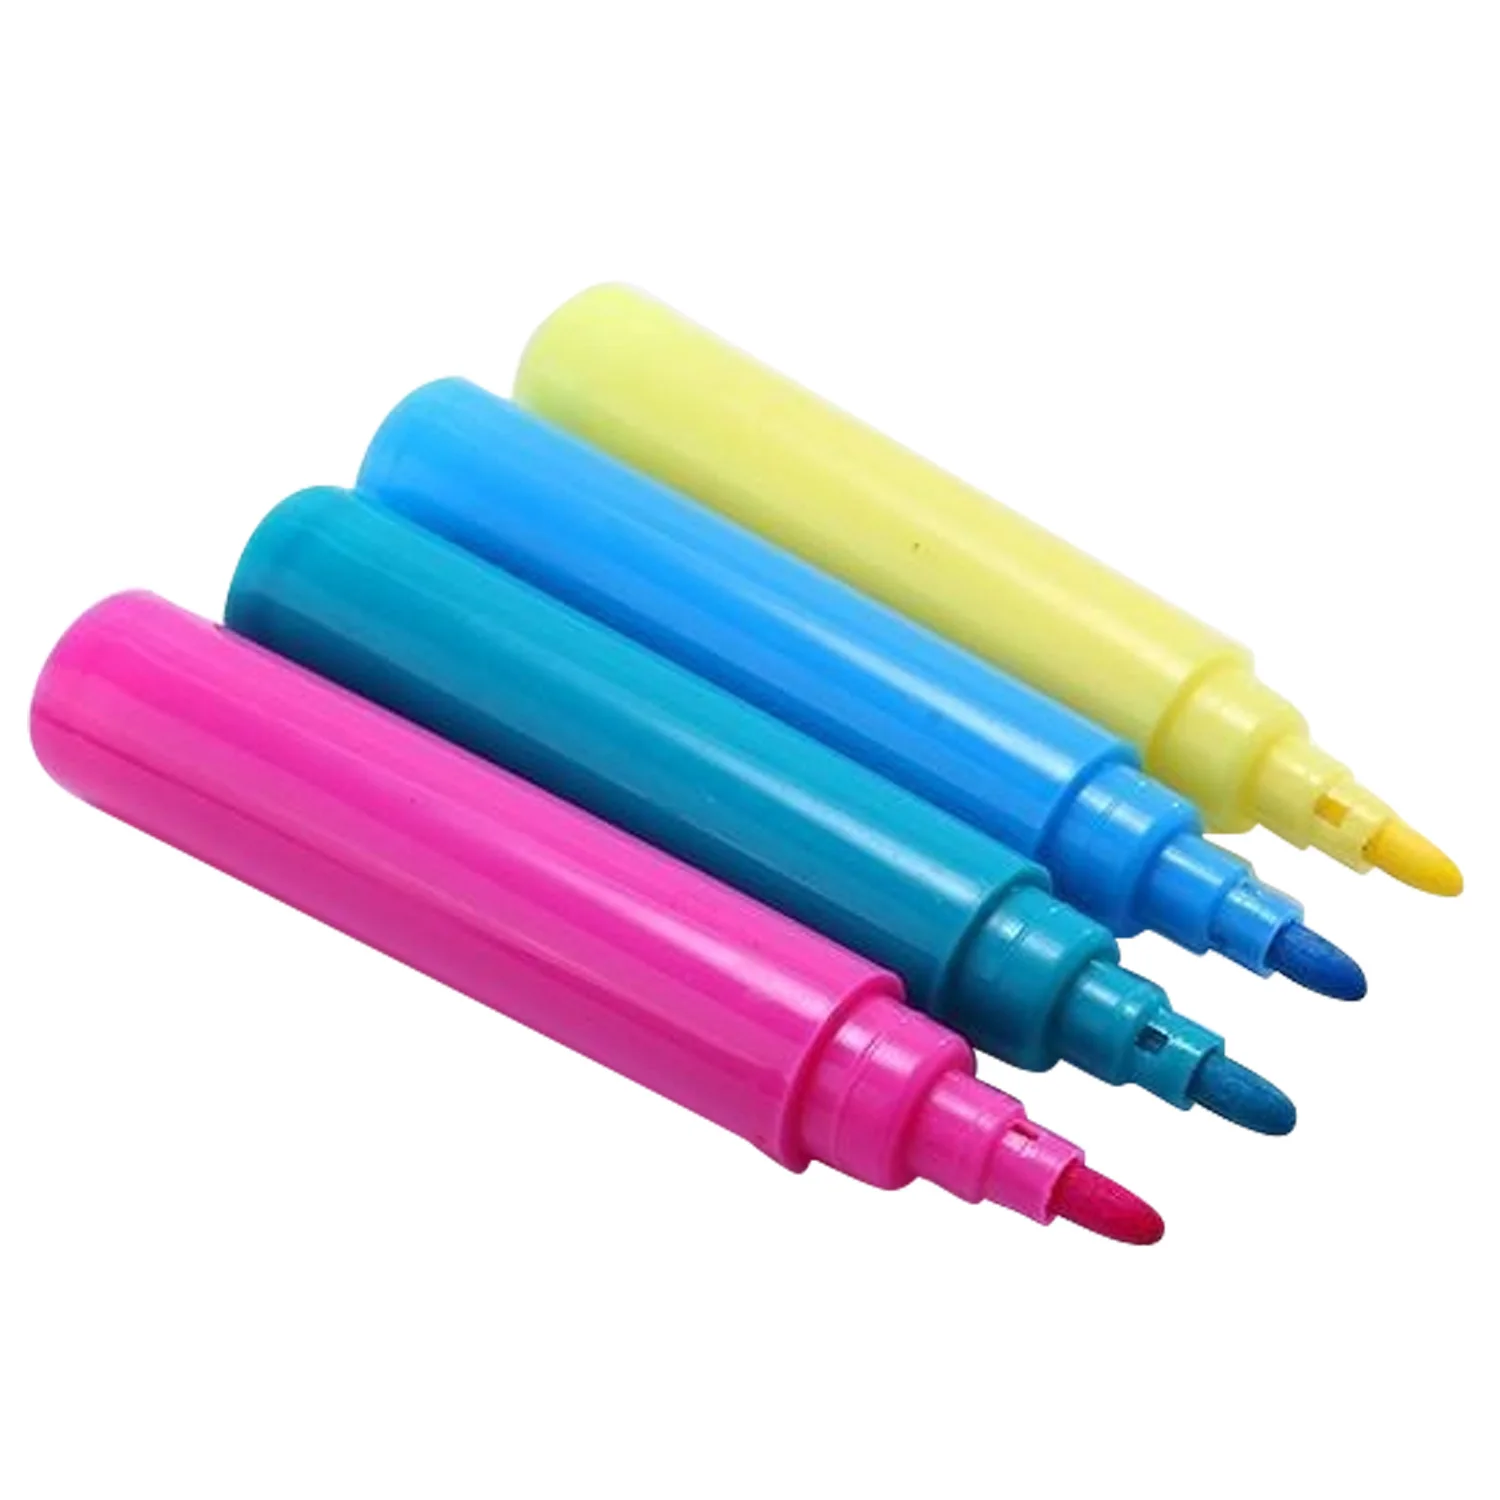 https://ae01.alicdn.com/kf/Hb179fd739c3d4268ab9c2bf1bdff9429T/150pcs-Colored-Pencil-Painting-Marker-Pen-Crayon-Paint-Brush-Drawing-Tool-Artist-Kit-School-Kindergarten-Children.jpg